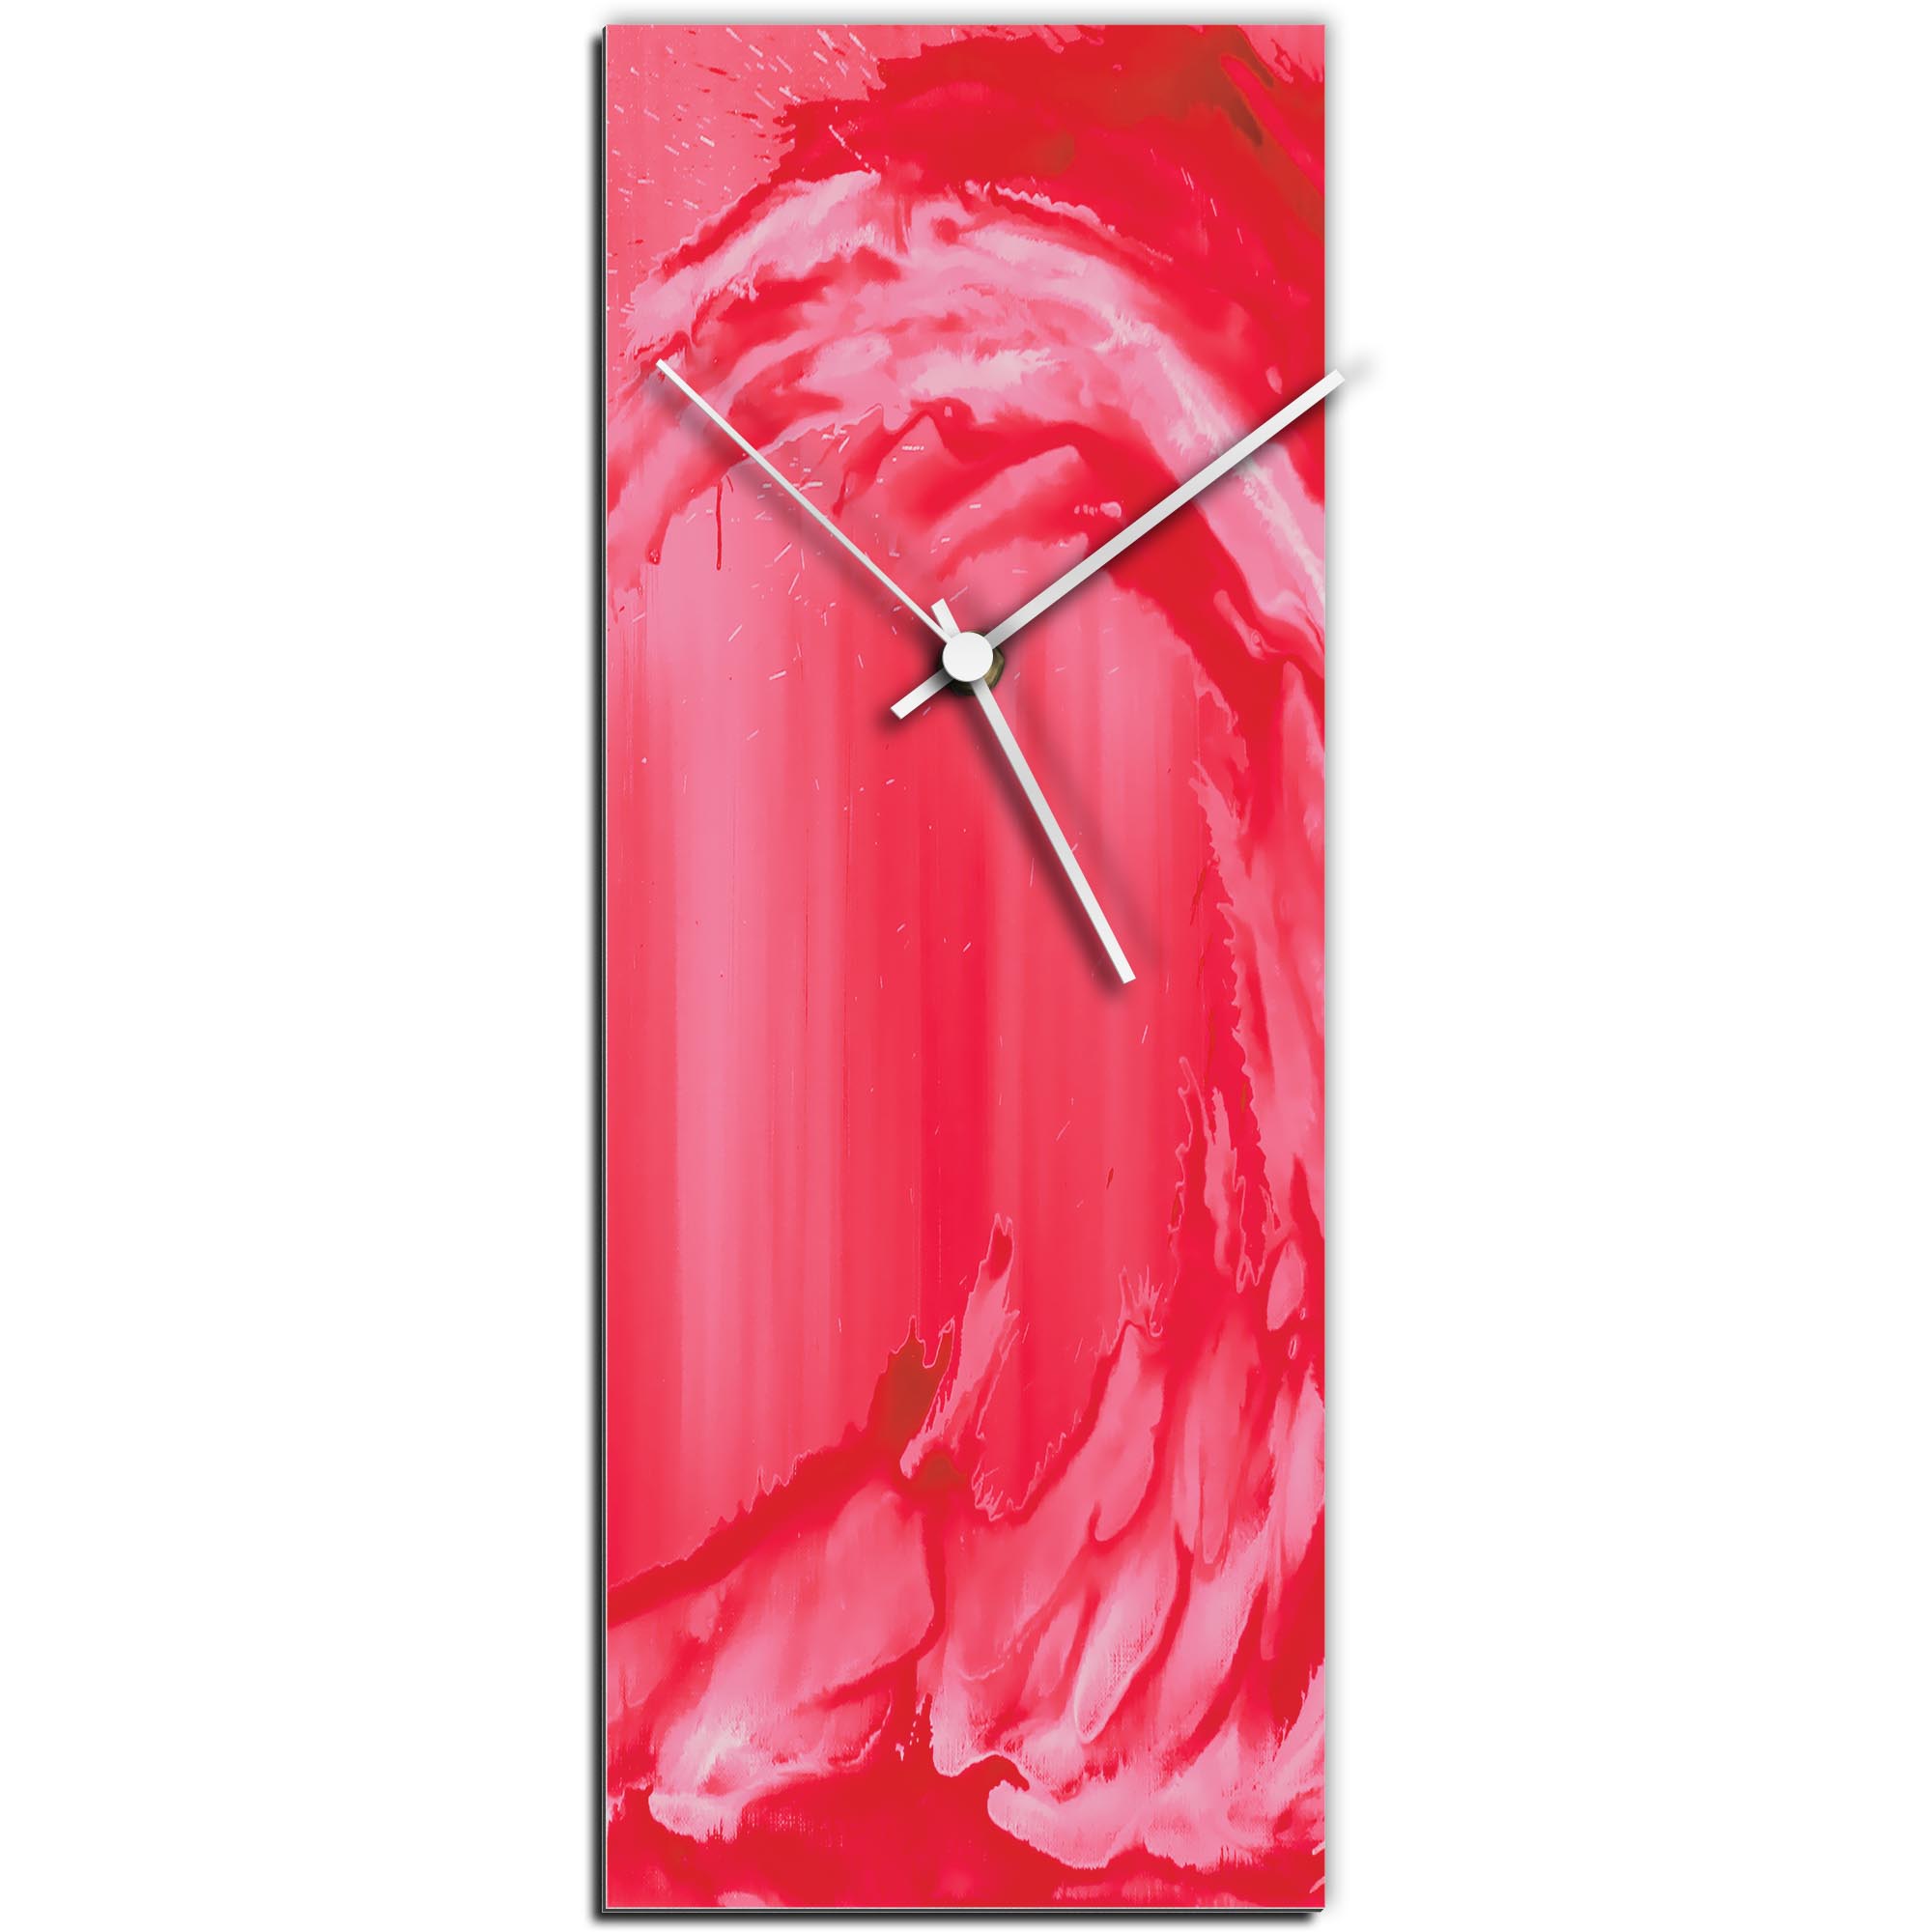 Mendo Vasilevski 'Red Wave v2 Clock Large' 9in x 24in Modern Wall Clock on Aluminum Composite